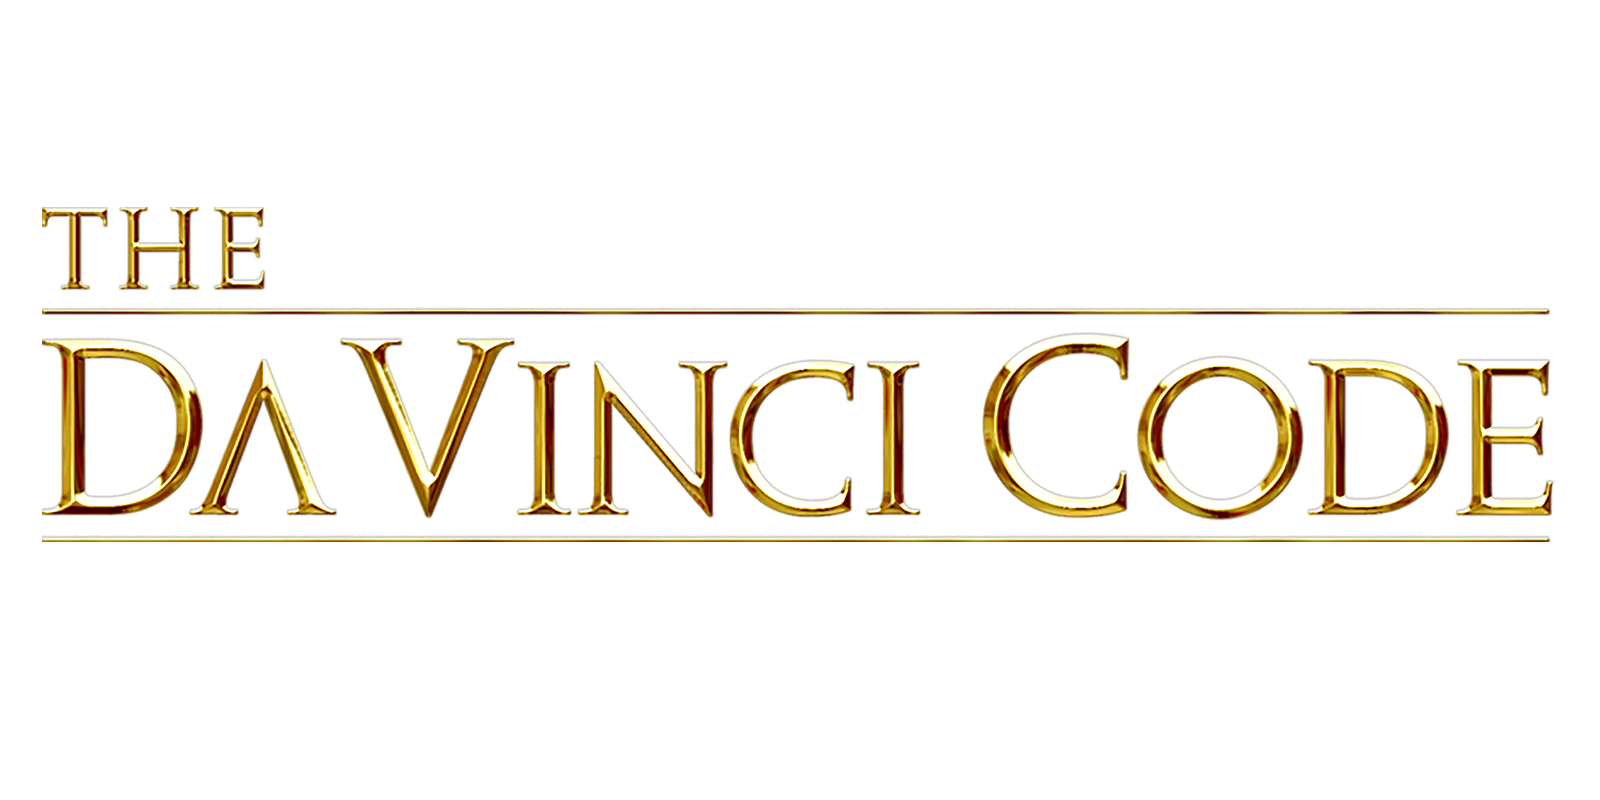 watch the da vinci code movie with subtitles